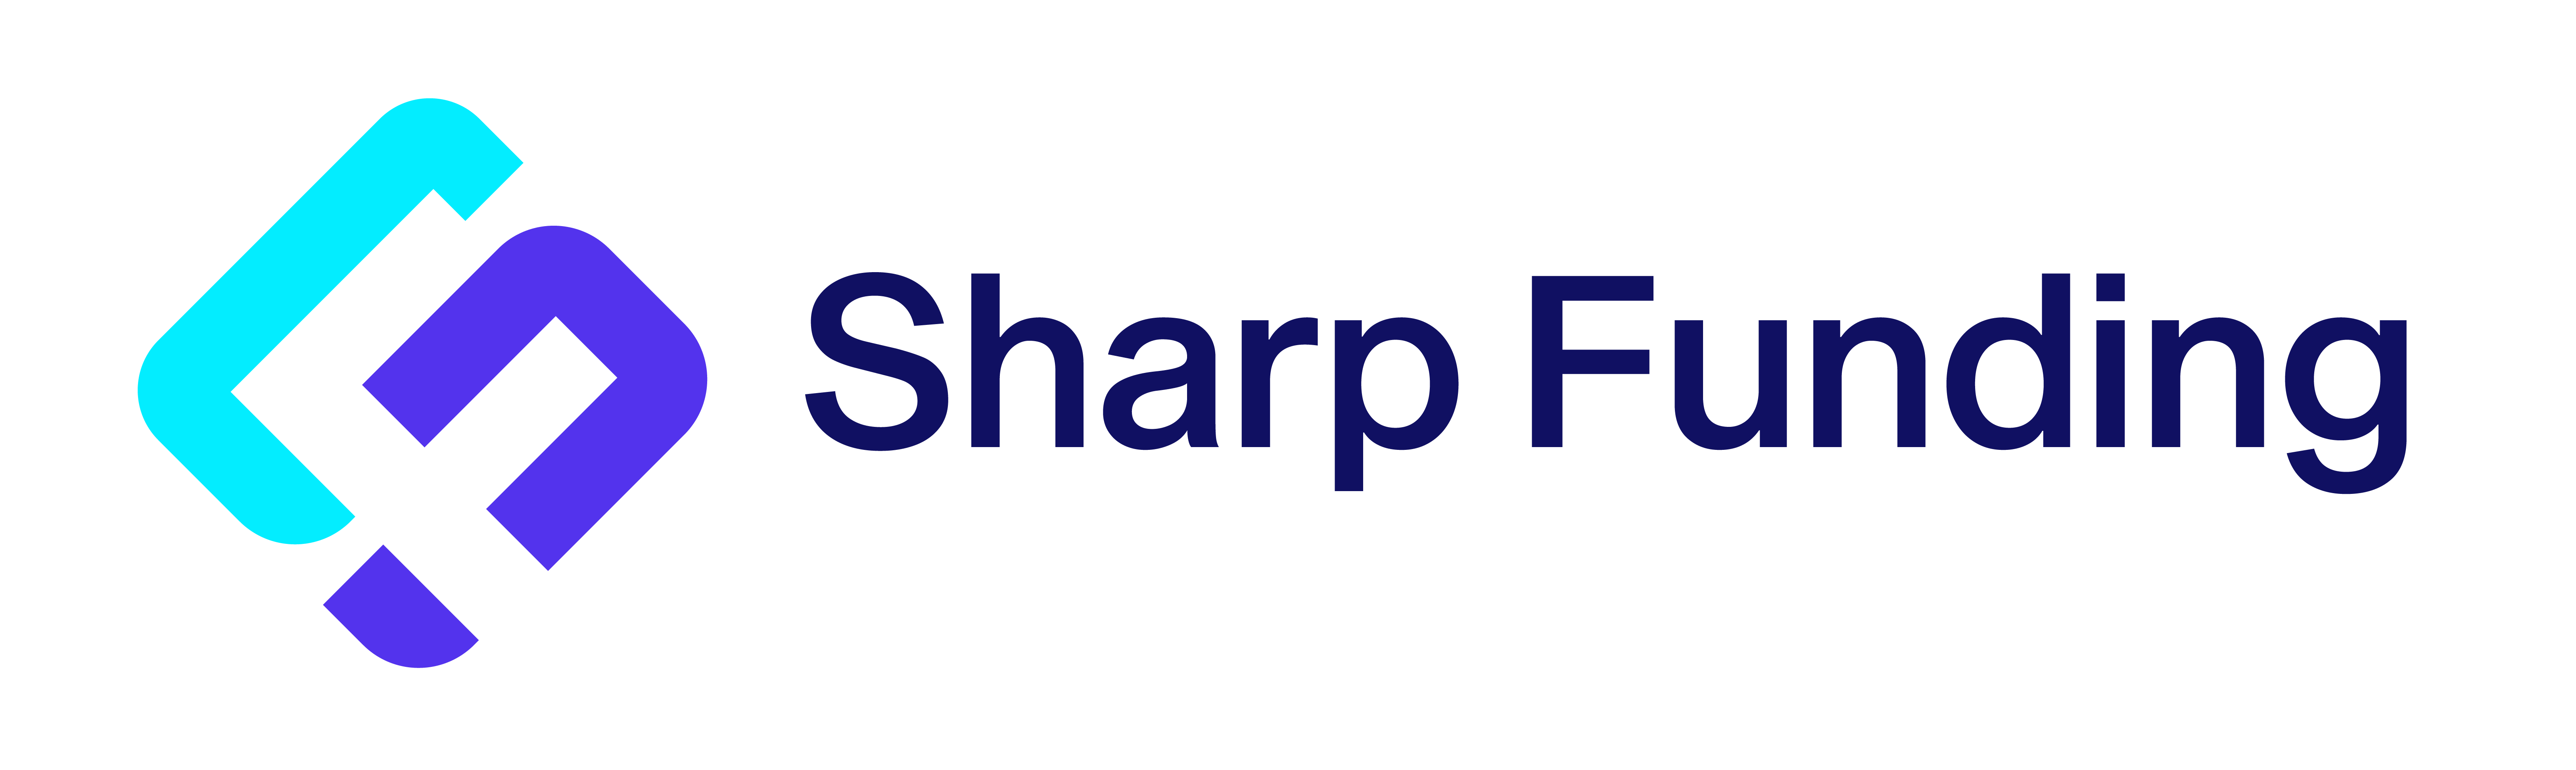 Sharp Funding logo